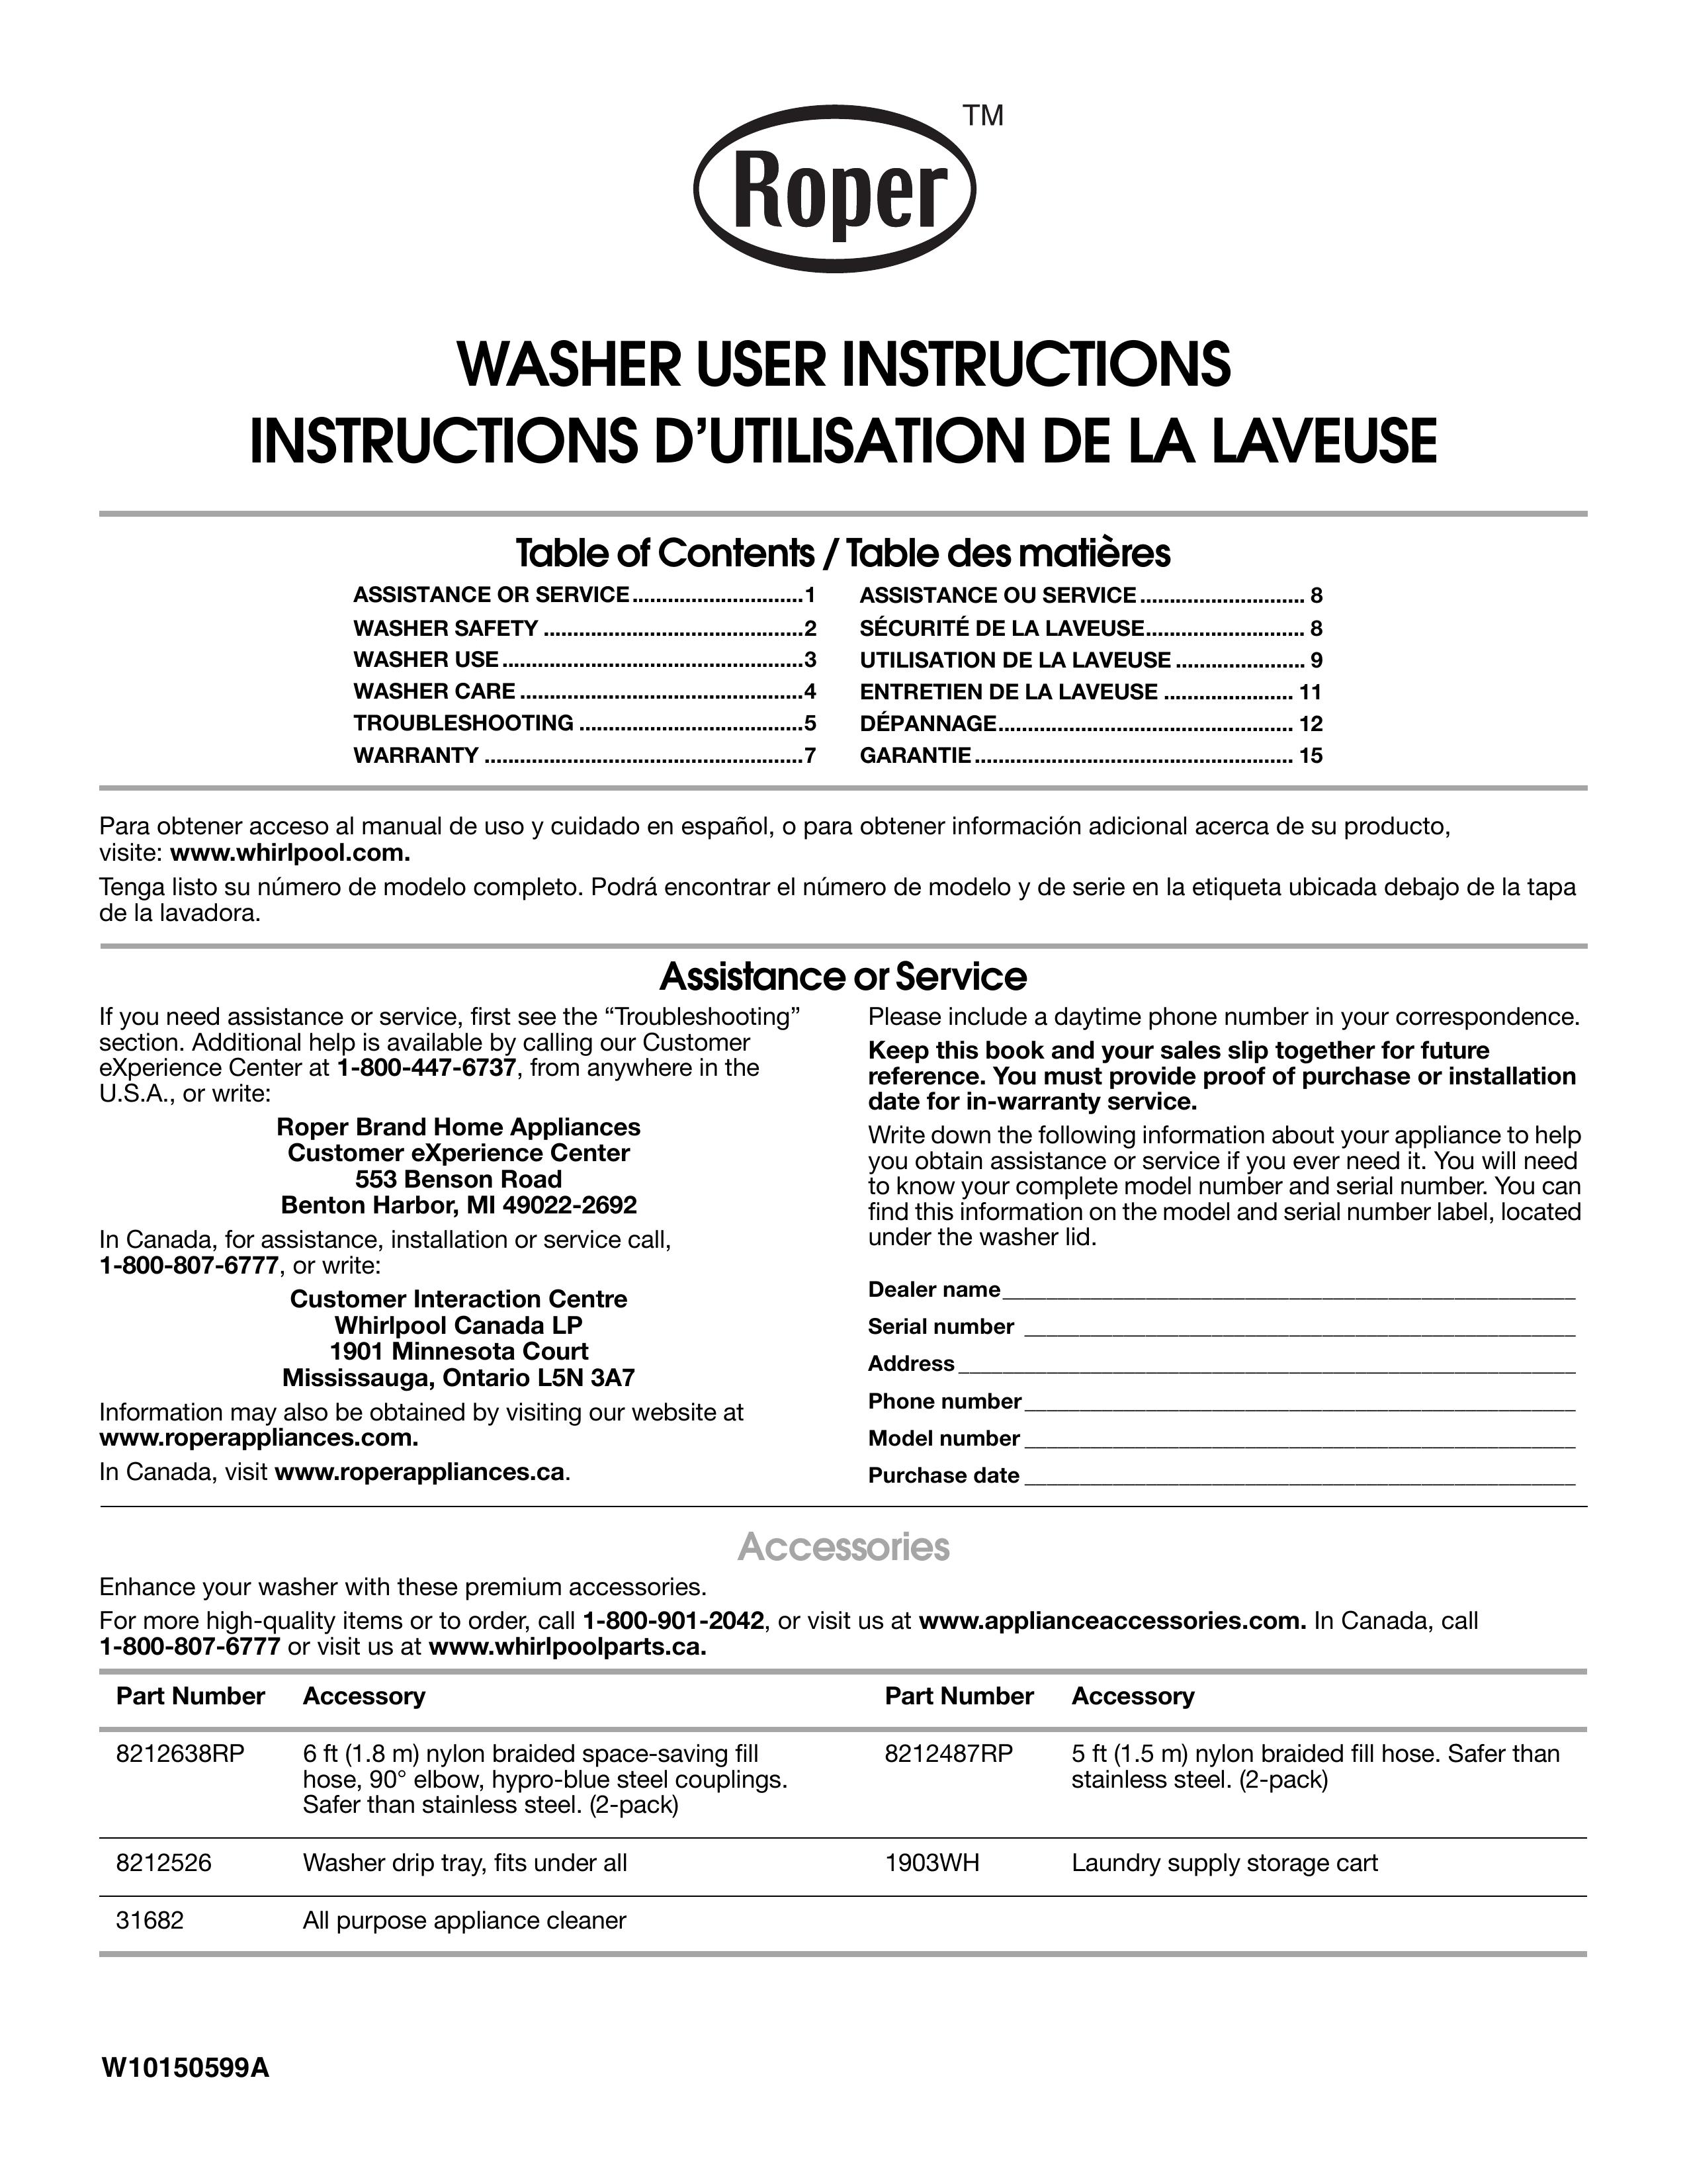 Roper W10150599A Washer User Manual